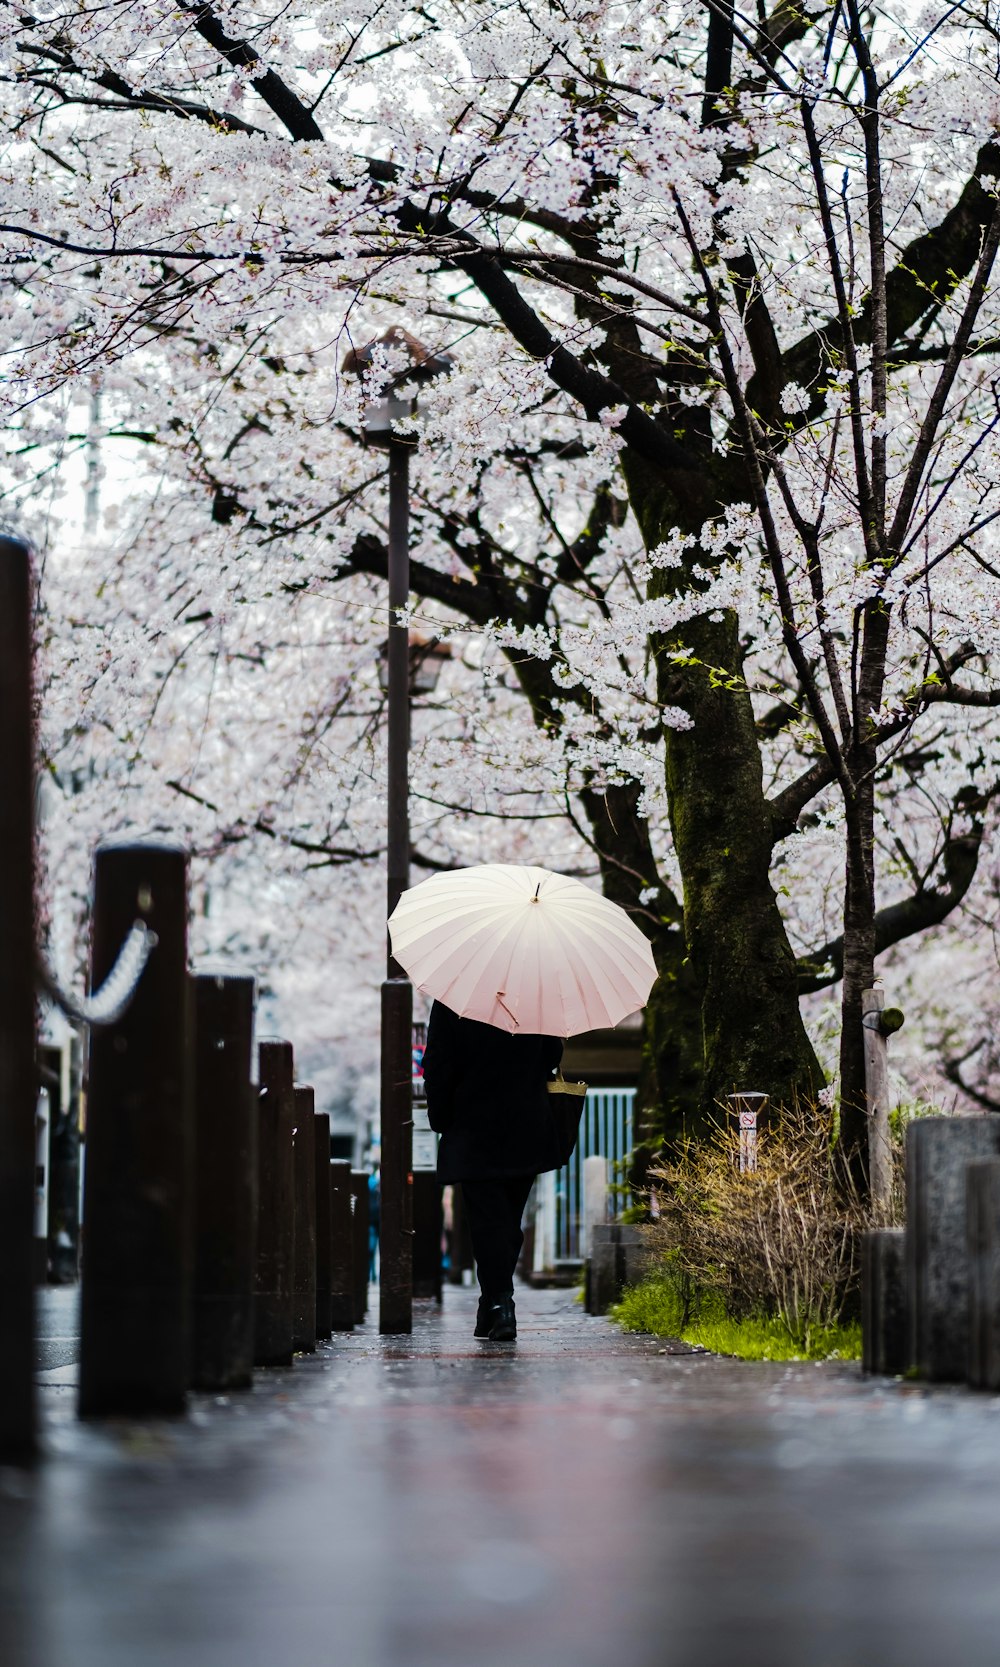 a person walking down a sidewalk with an umbrella